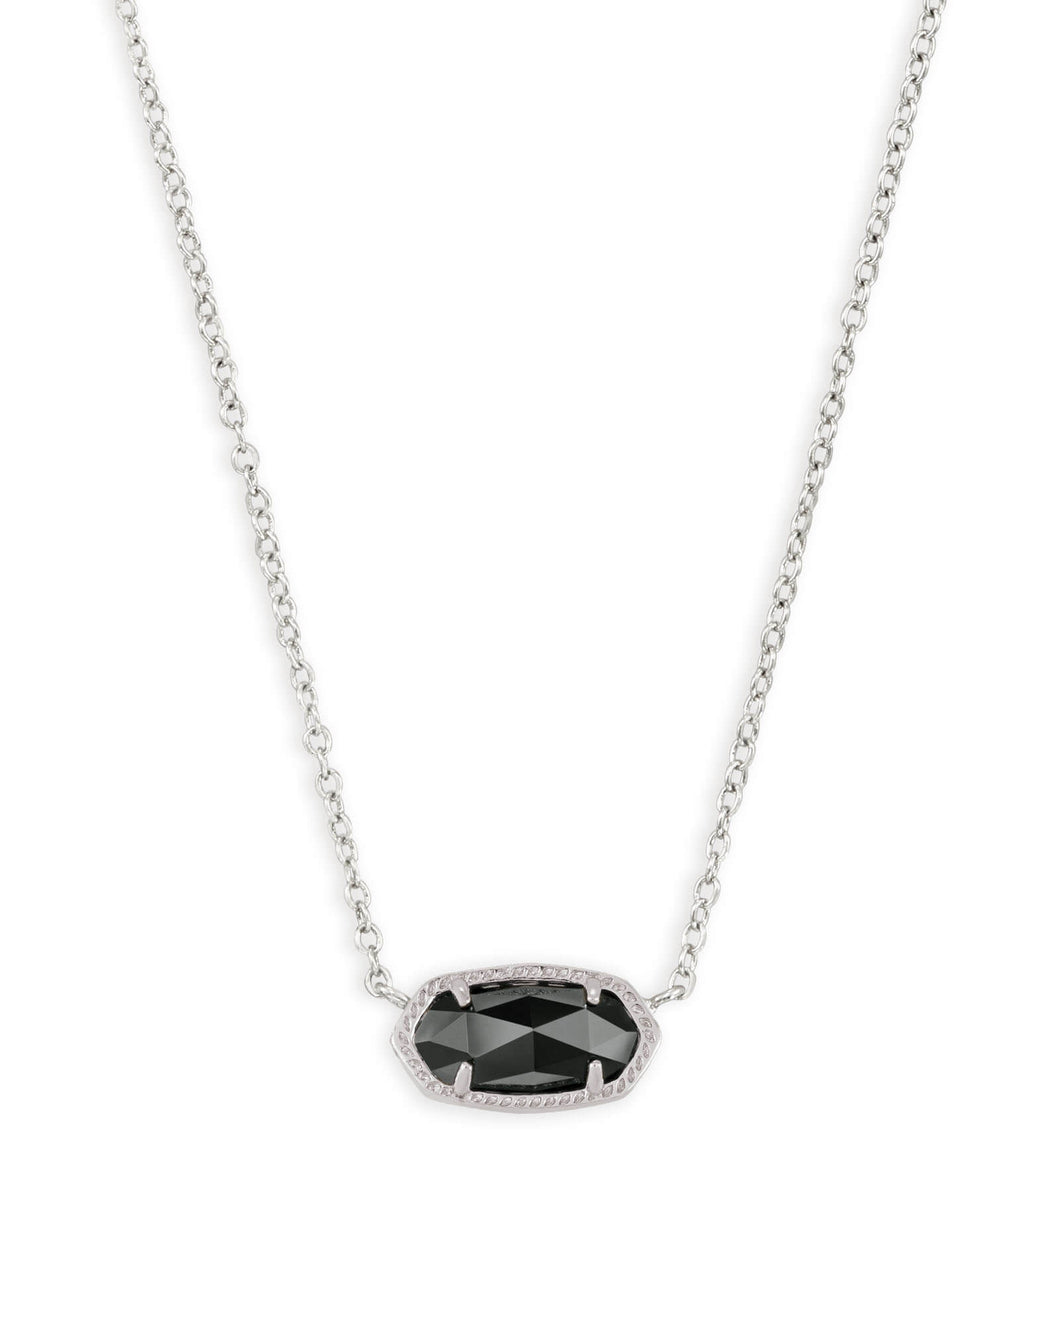 Kendra Scott Elisa Silver Pendant Necklace in Black